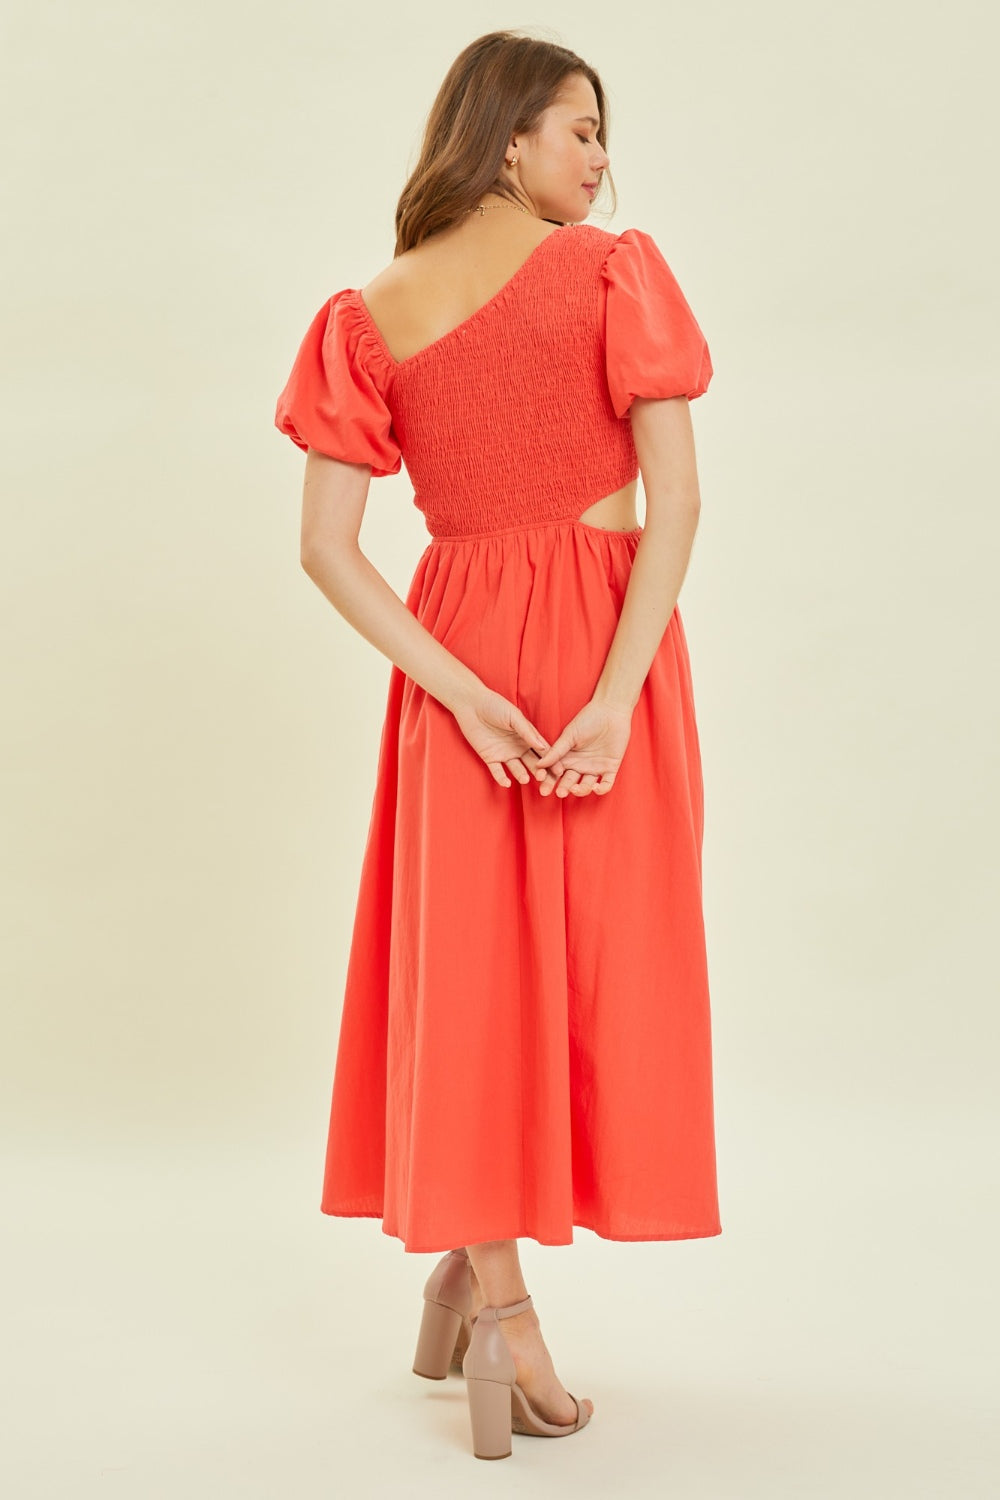 HEYSON Cherry Red Smocked Cutout Midi Dress